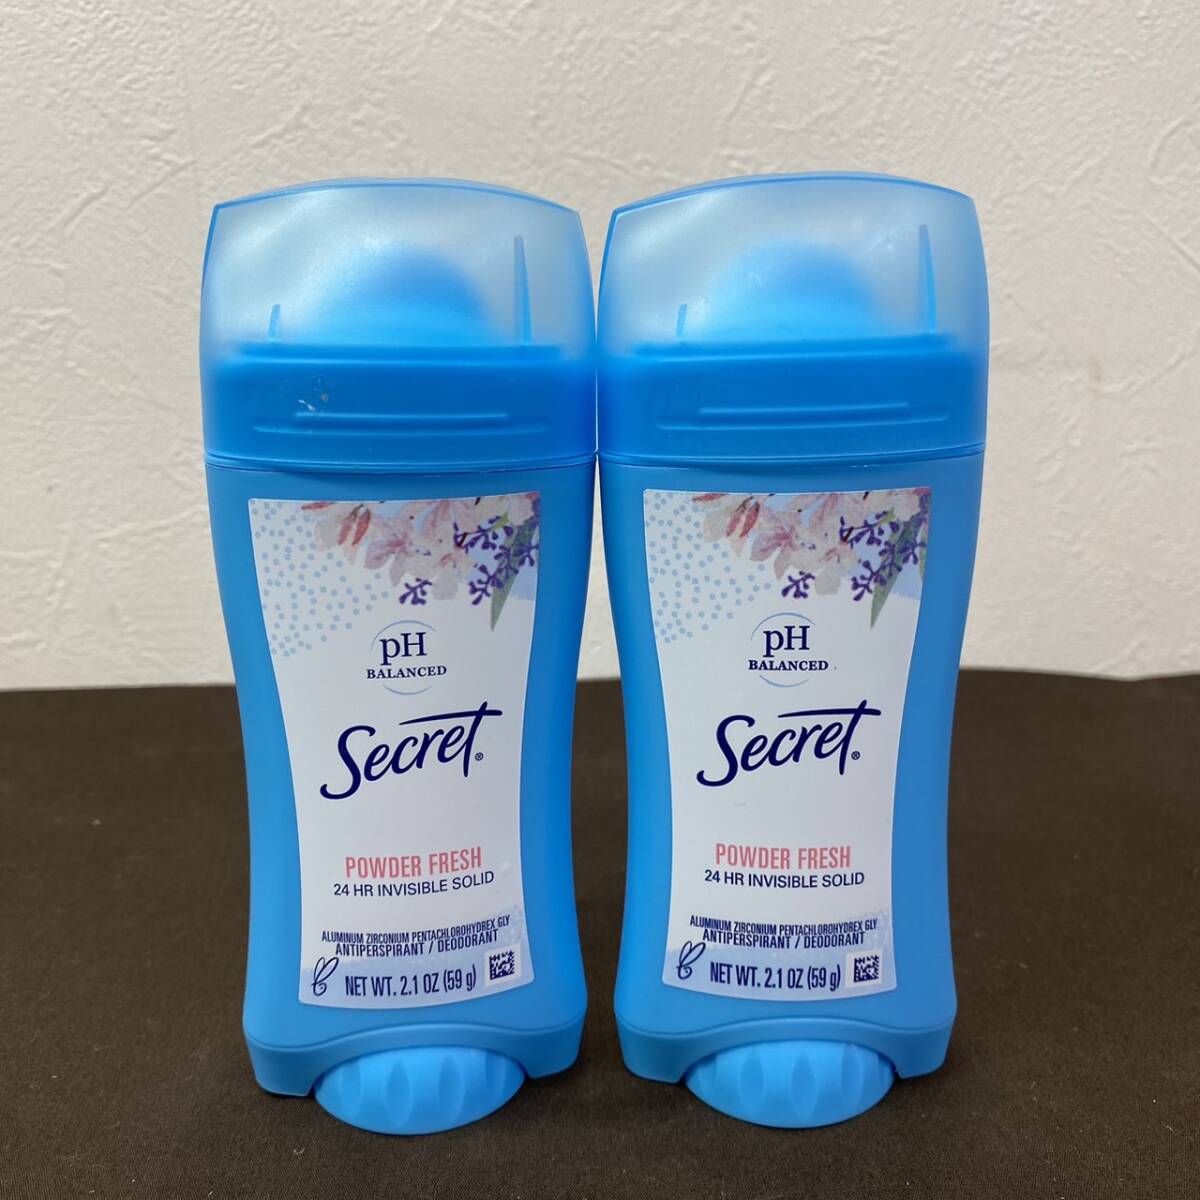 [MH-6481] used beautiful goods Secret Secret powder fresh 5 pcs set abroad deodorant 